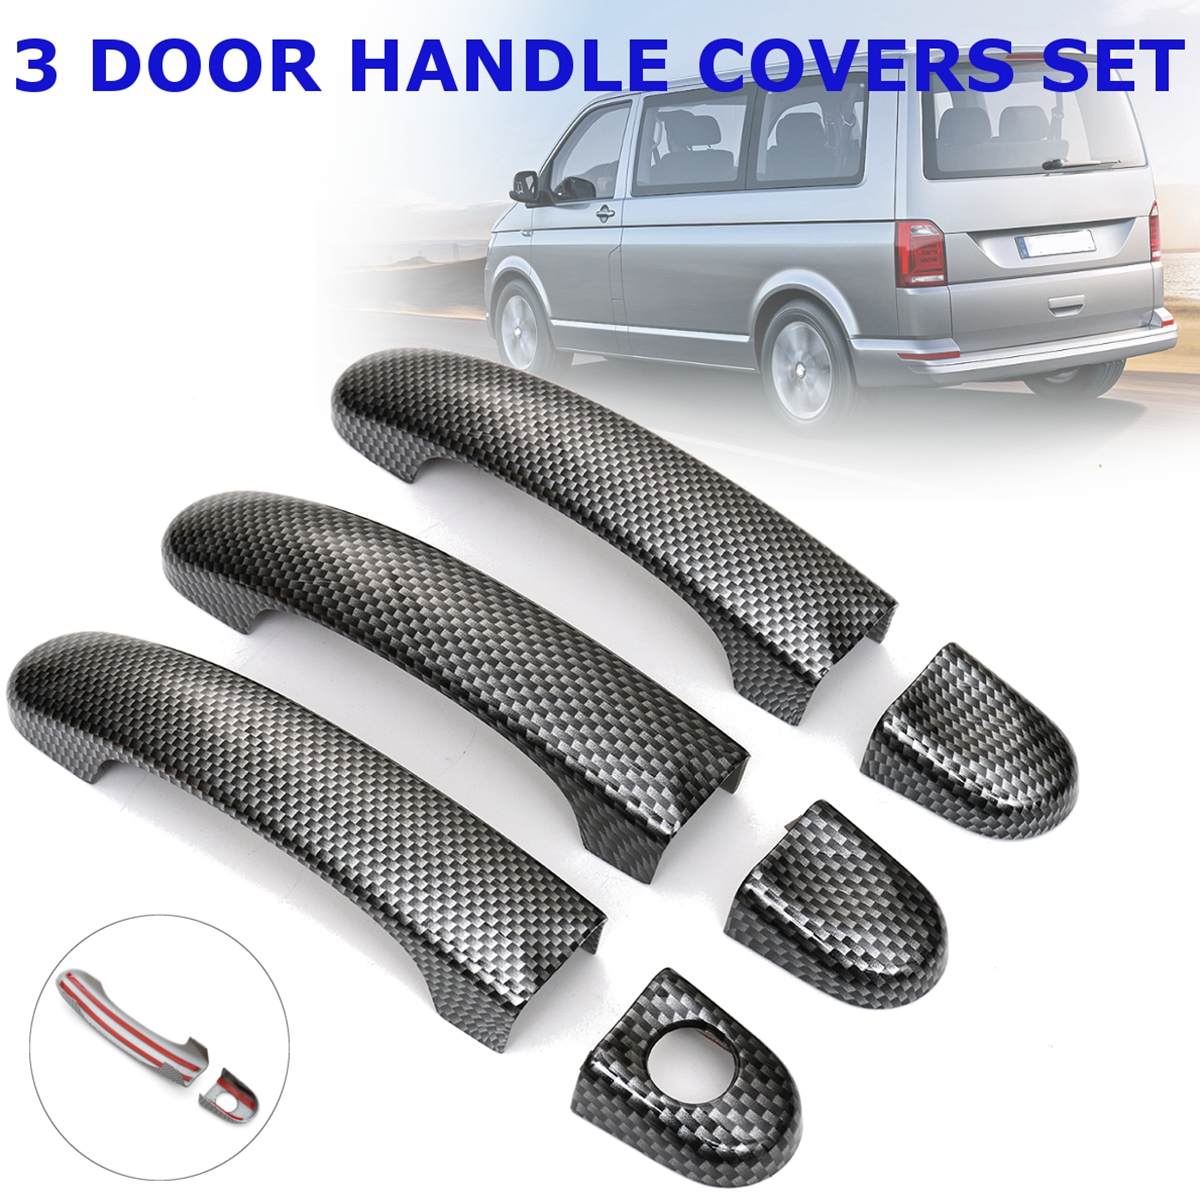 6pcs-Set-ABS-Carbon-3-Door-Handle-Covers-Handles-For-VW-Transporter-T5-T6-Caddy-for-Vans-1321930